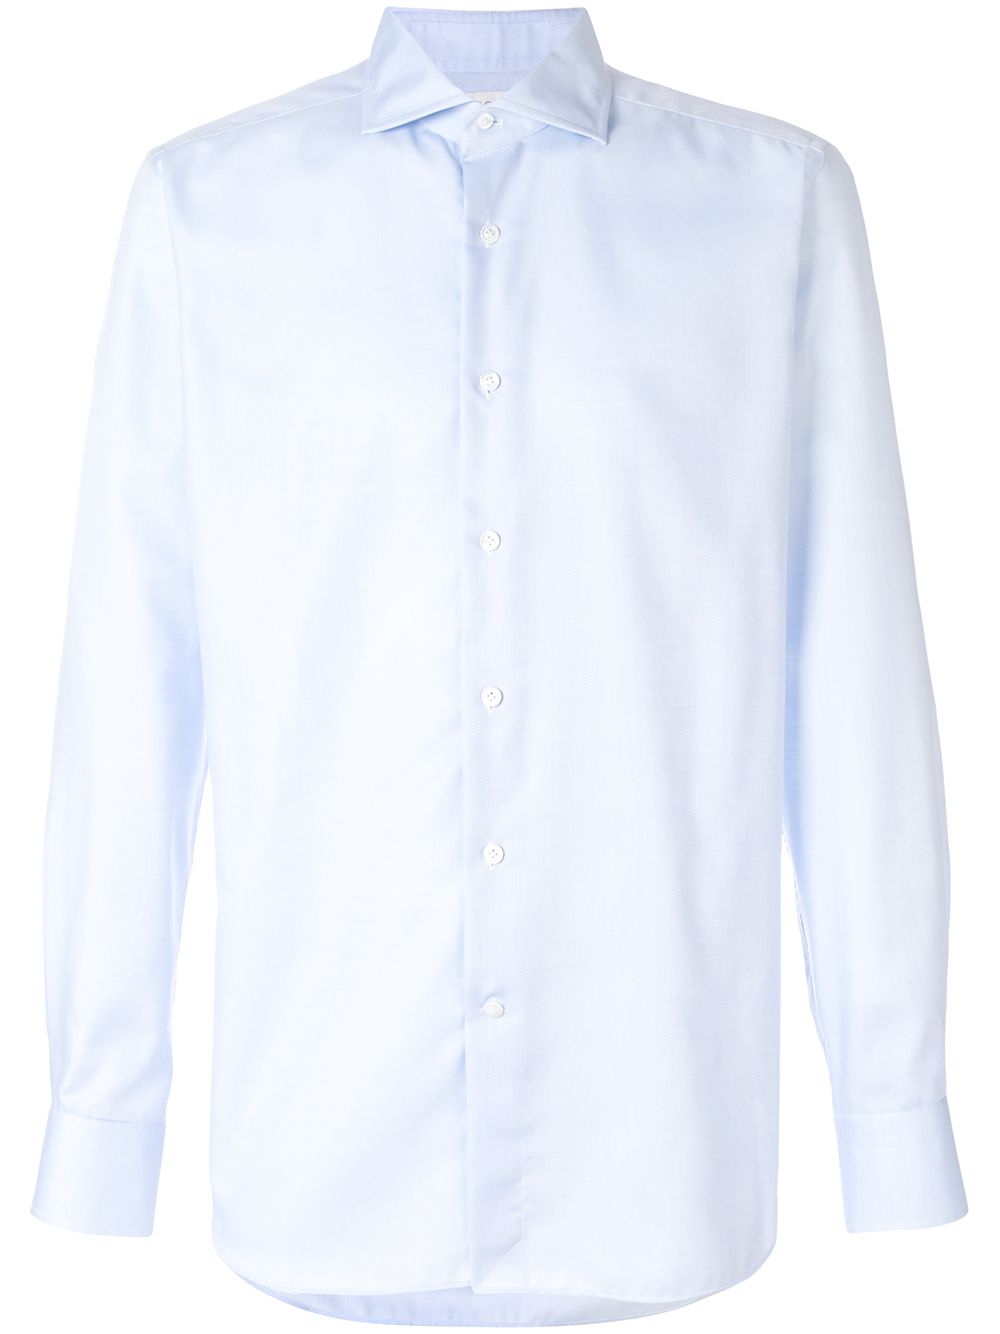 BAGUTTA cutaway collar shirt,B342L241812922405